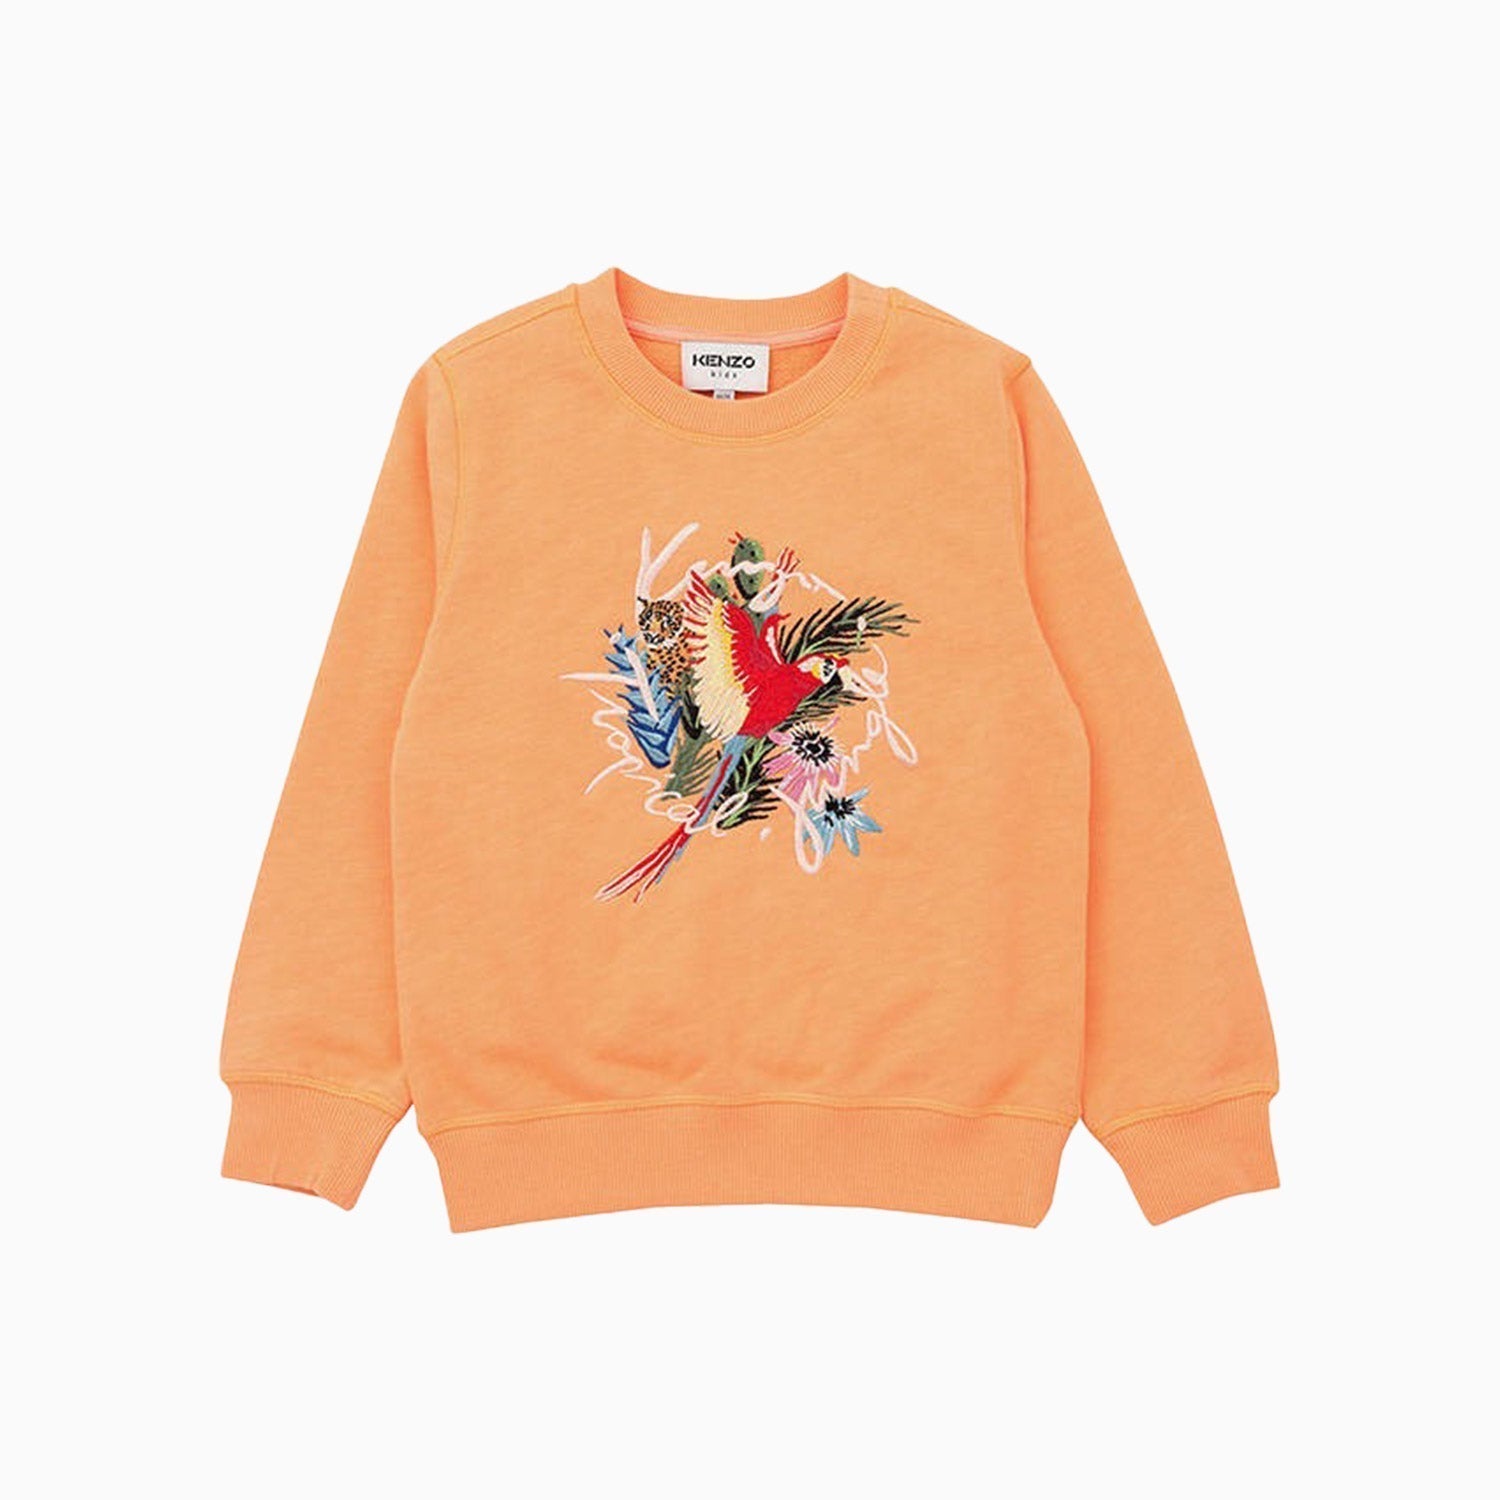 Kenzo Kid's Slub Fleece Sweatshirt - Color: Bright Red - Kids Premium Clothing -